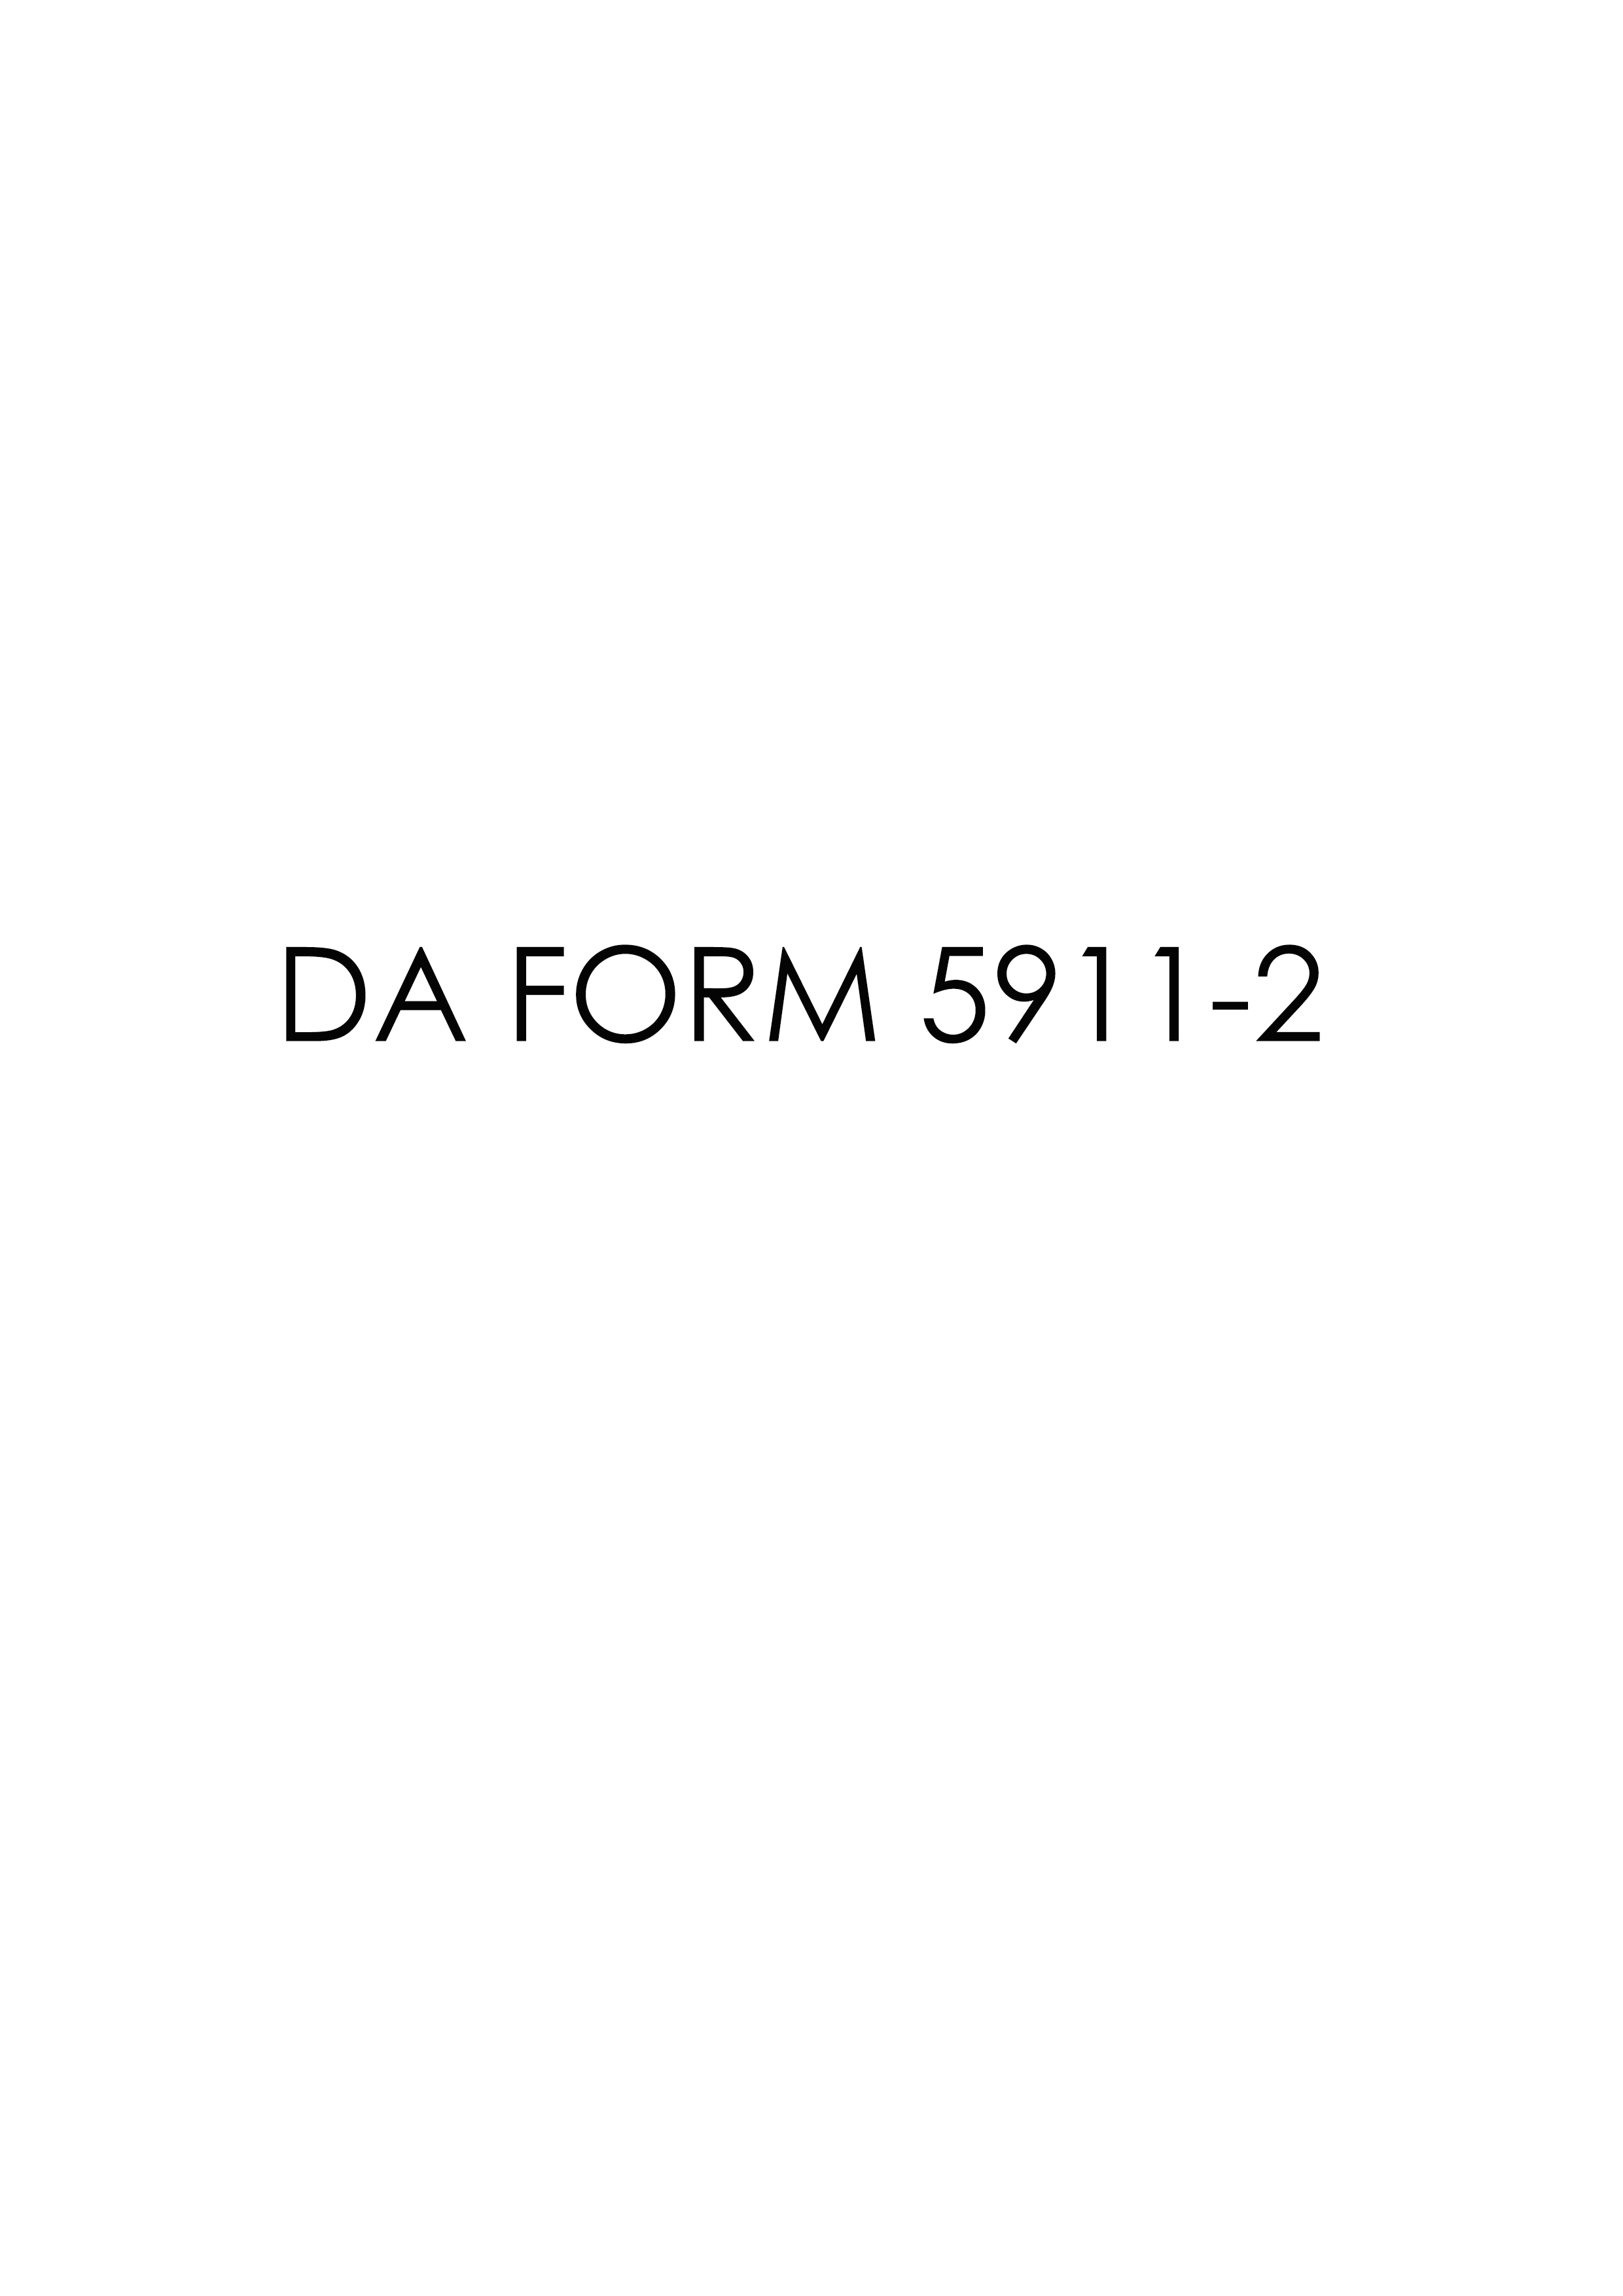 Download Fillable da Form 5911-2